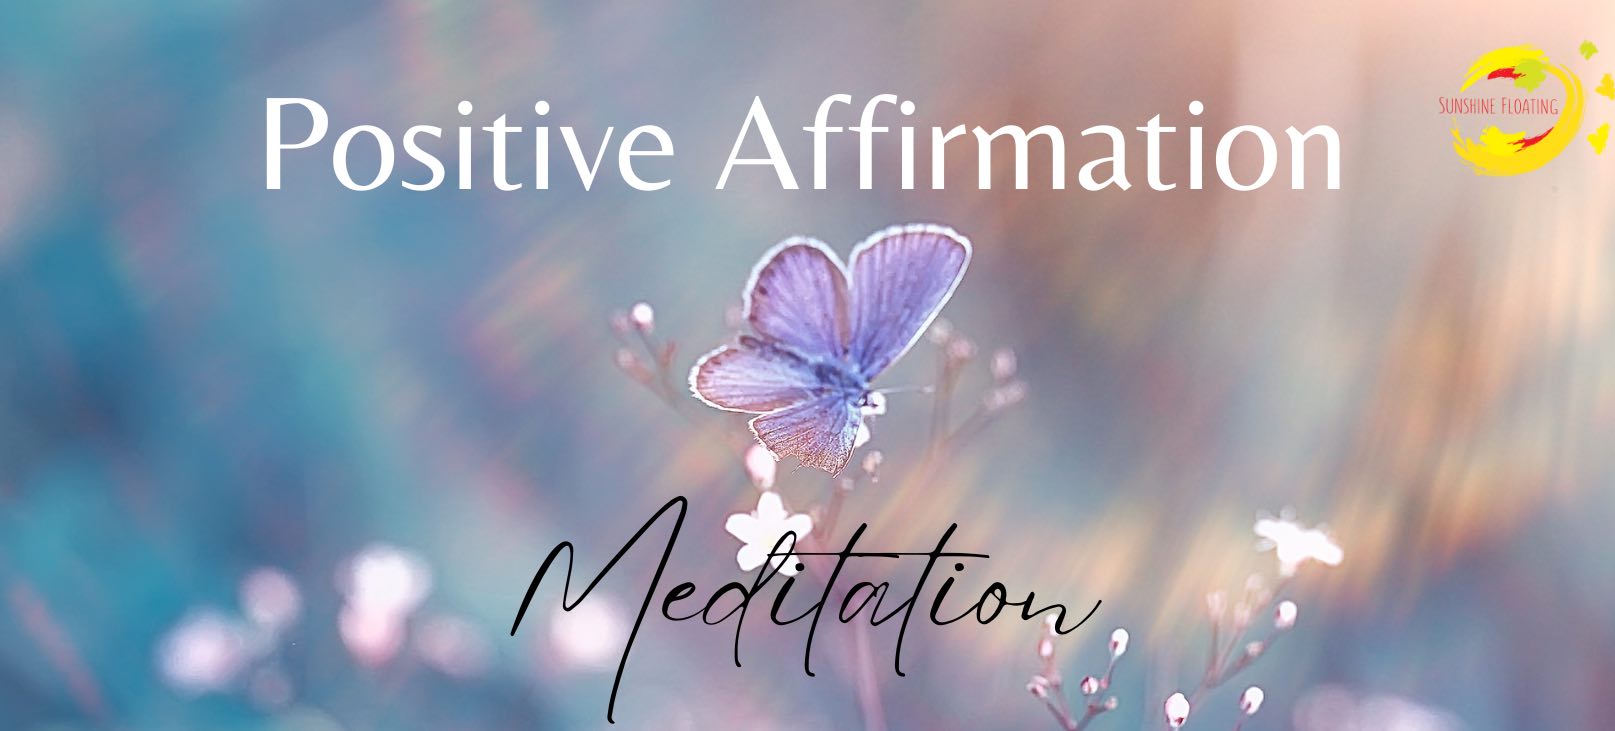 positive-affirmation-meditation-free-wellbeing-resources-sunshinefloating_1